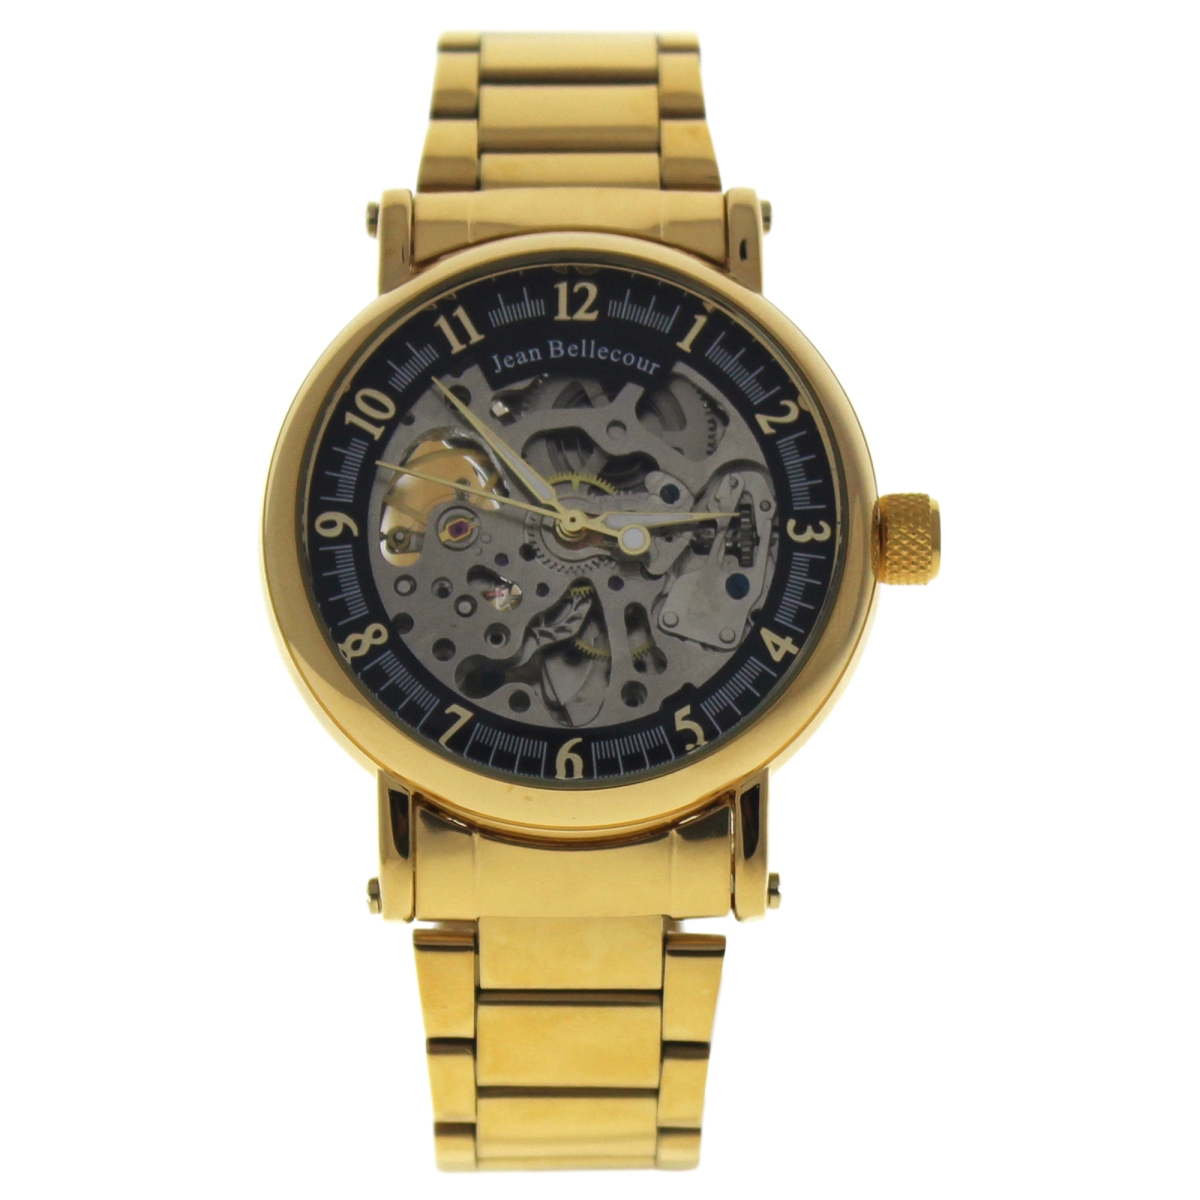 M-WAT-1346 Gold Stainless Steel Bracelet Watch for Men - REDS28 -  Jean Bellecour